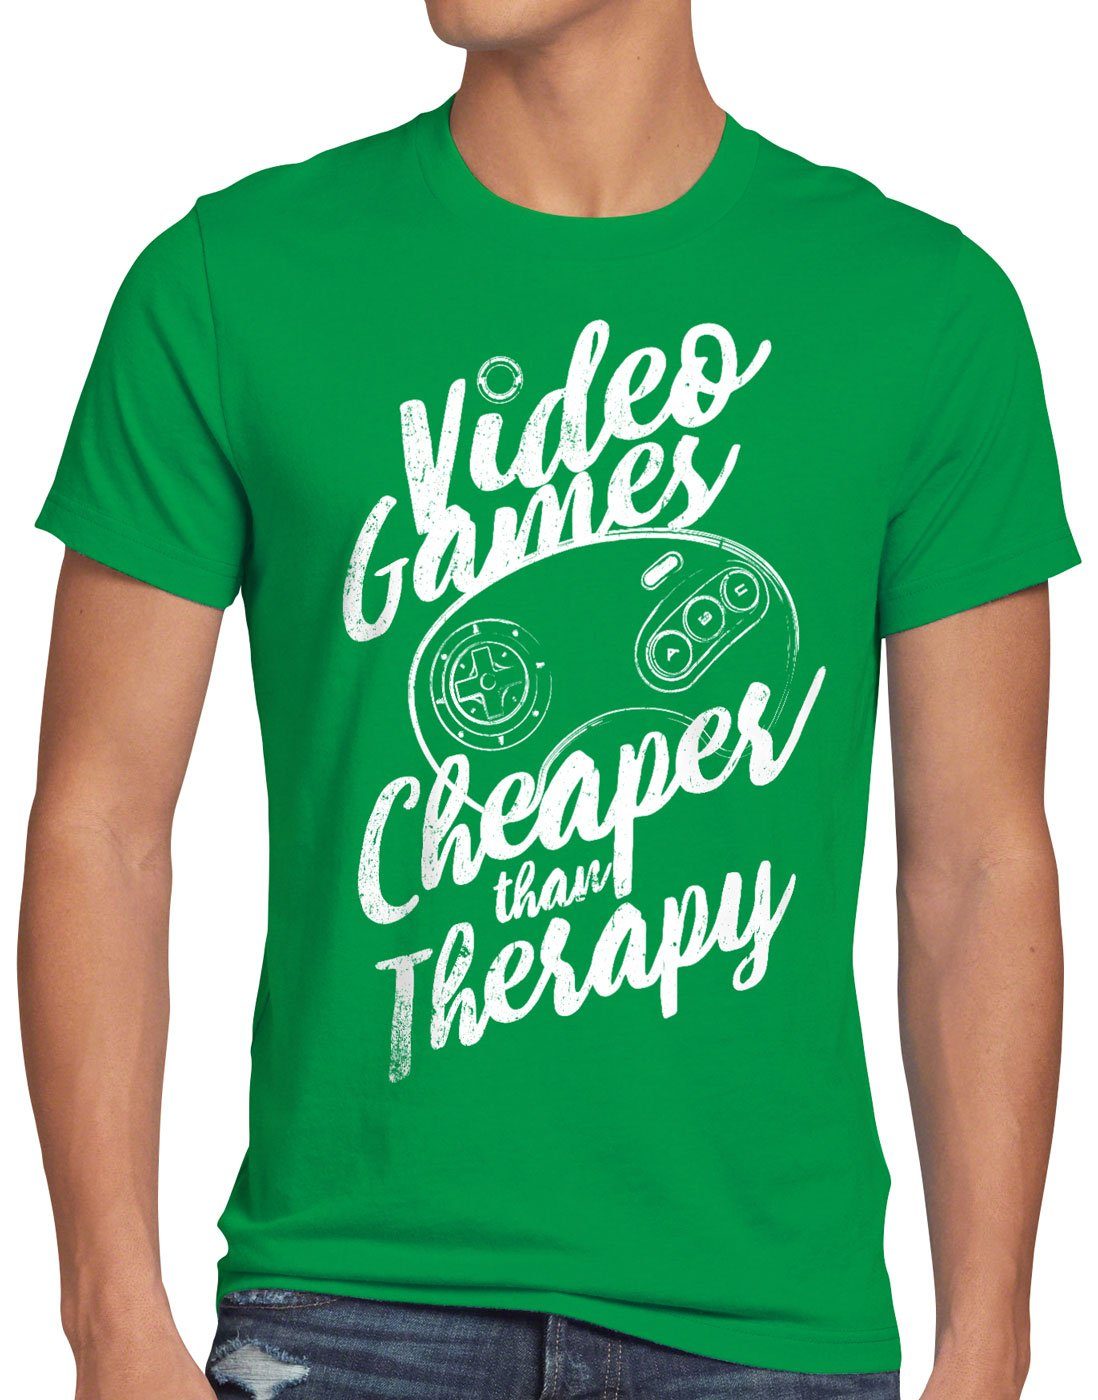 style3 Print-Shirt gamer Therapy classic Video T-Shirt retro grün sonic Herren konsole Game drive